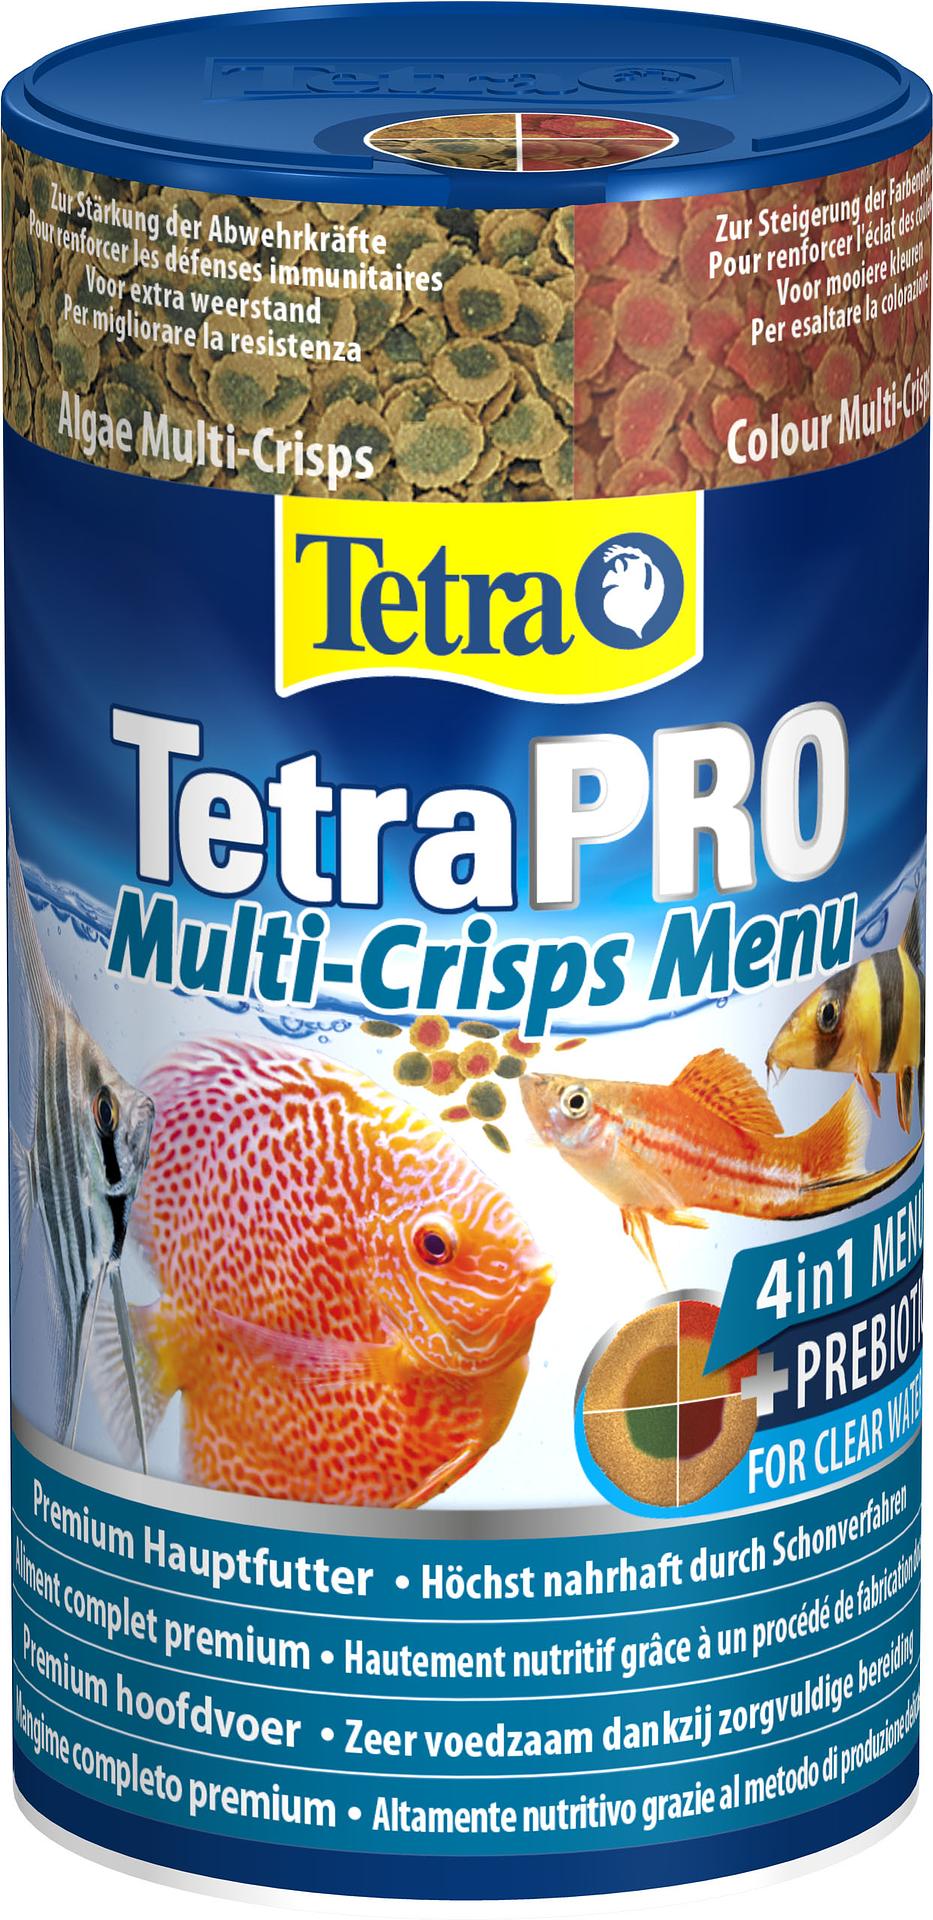 TetraPro Menu